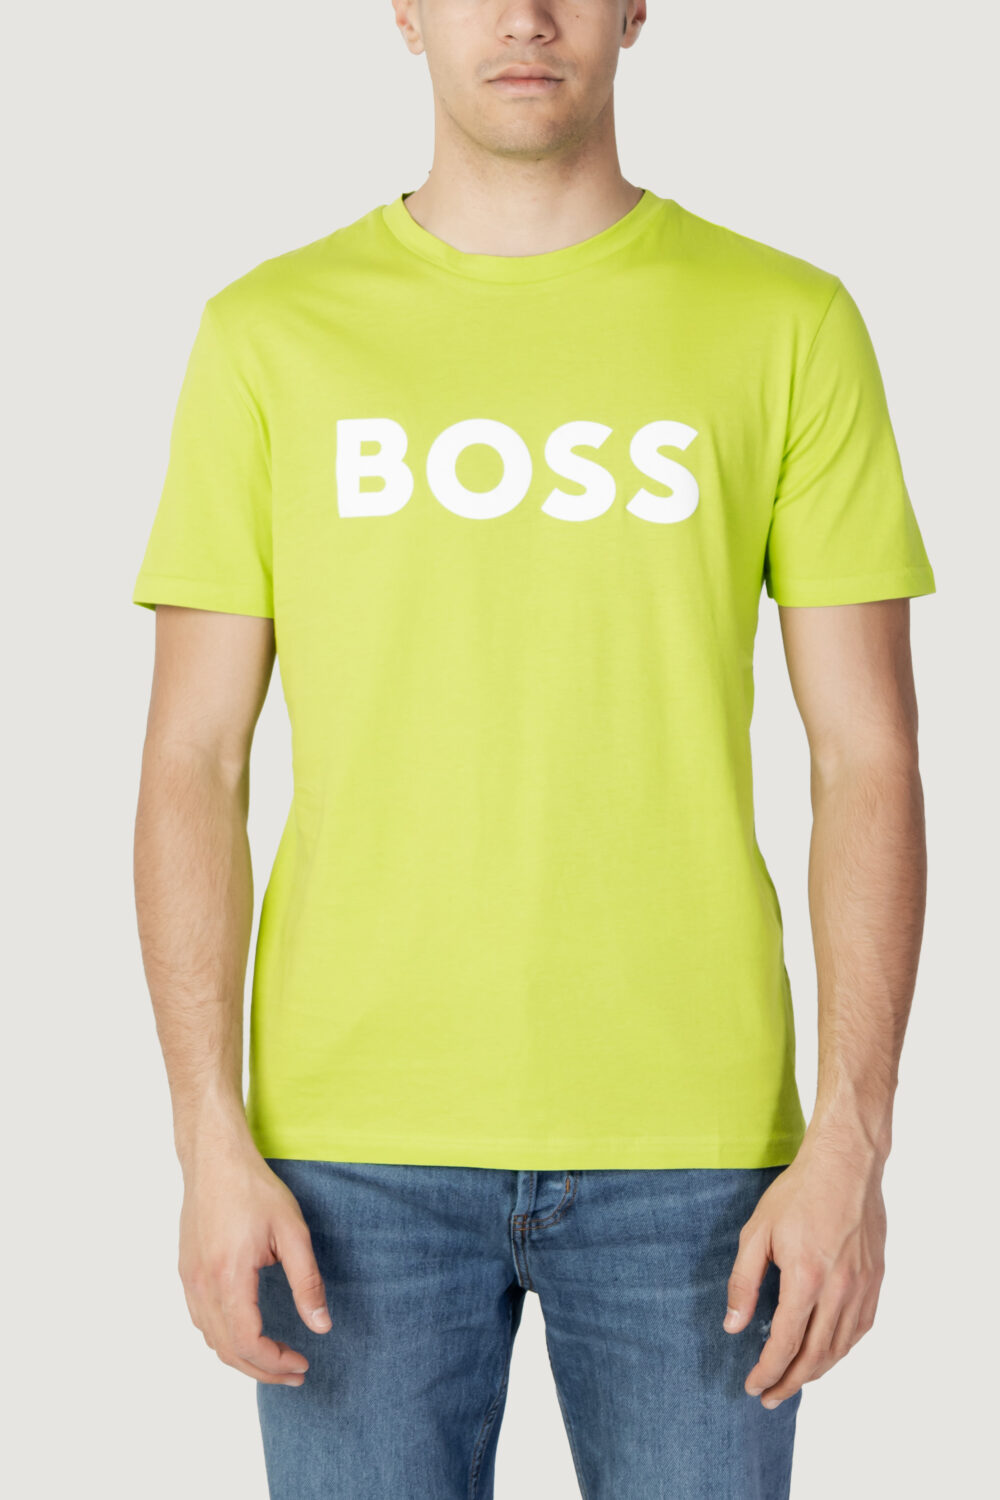 T-shirt Boss jersey thinking 1 Verde flavour - Foto 5